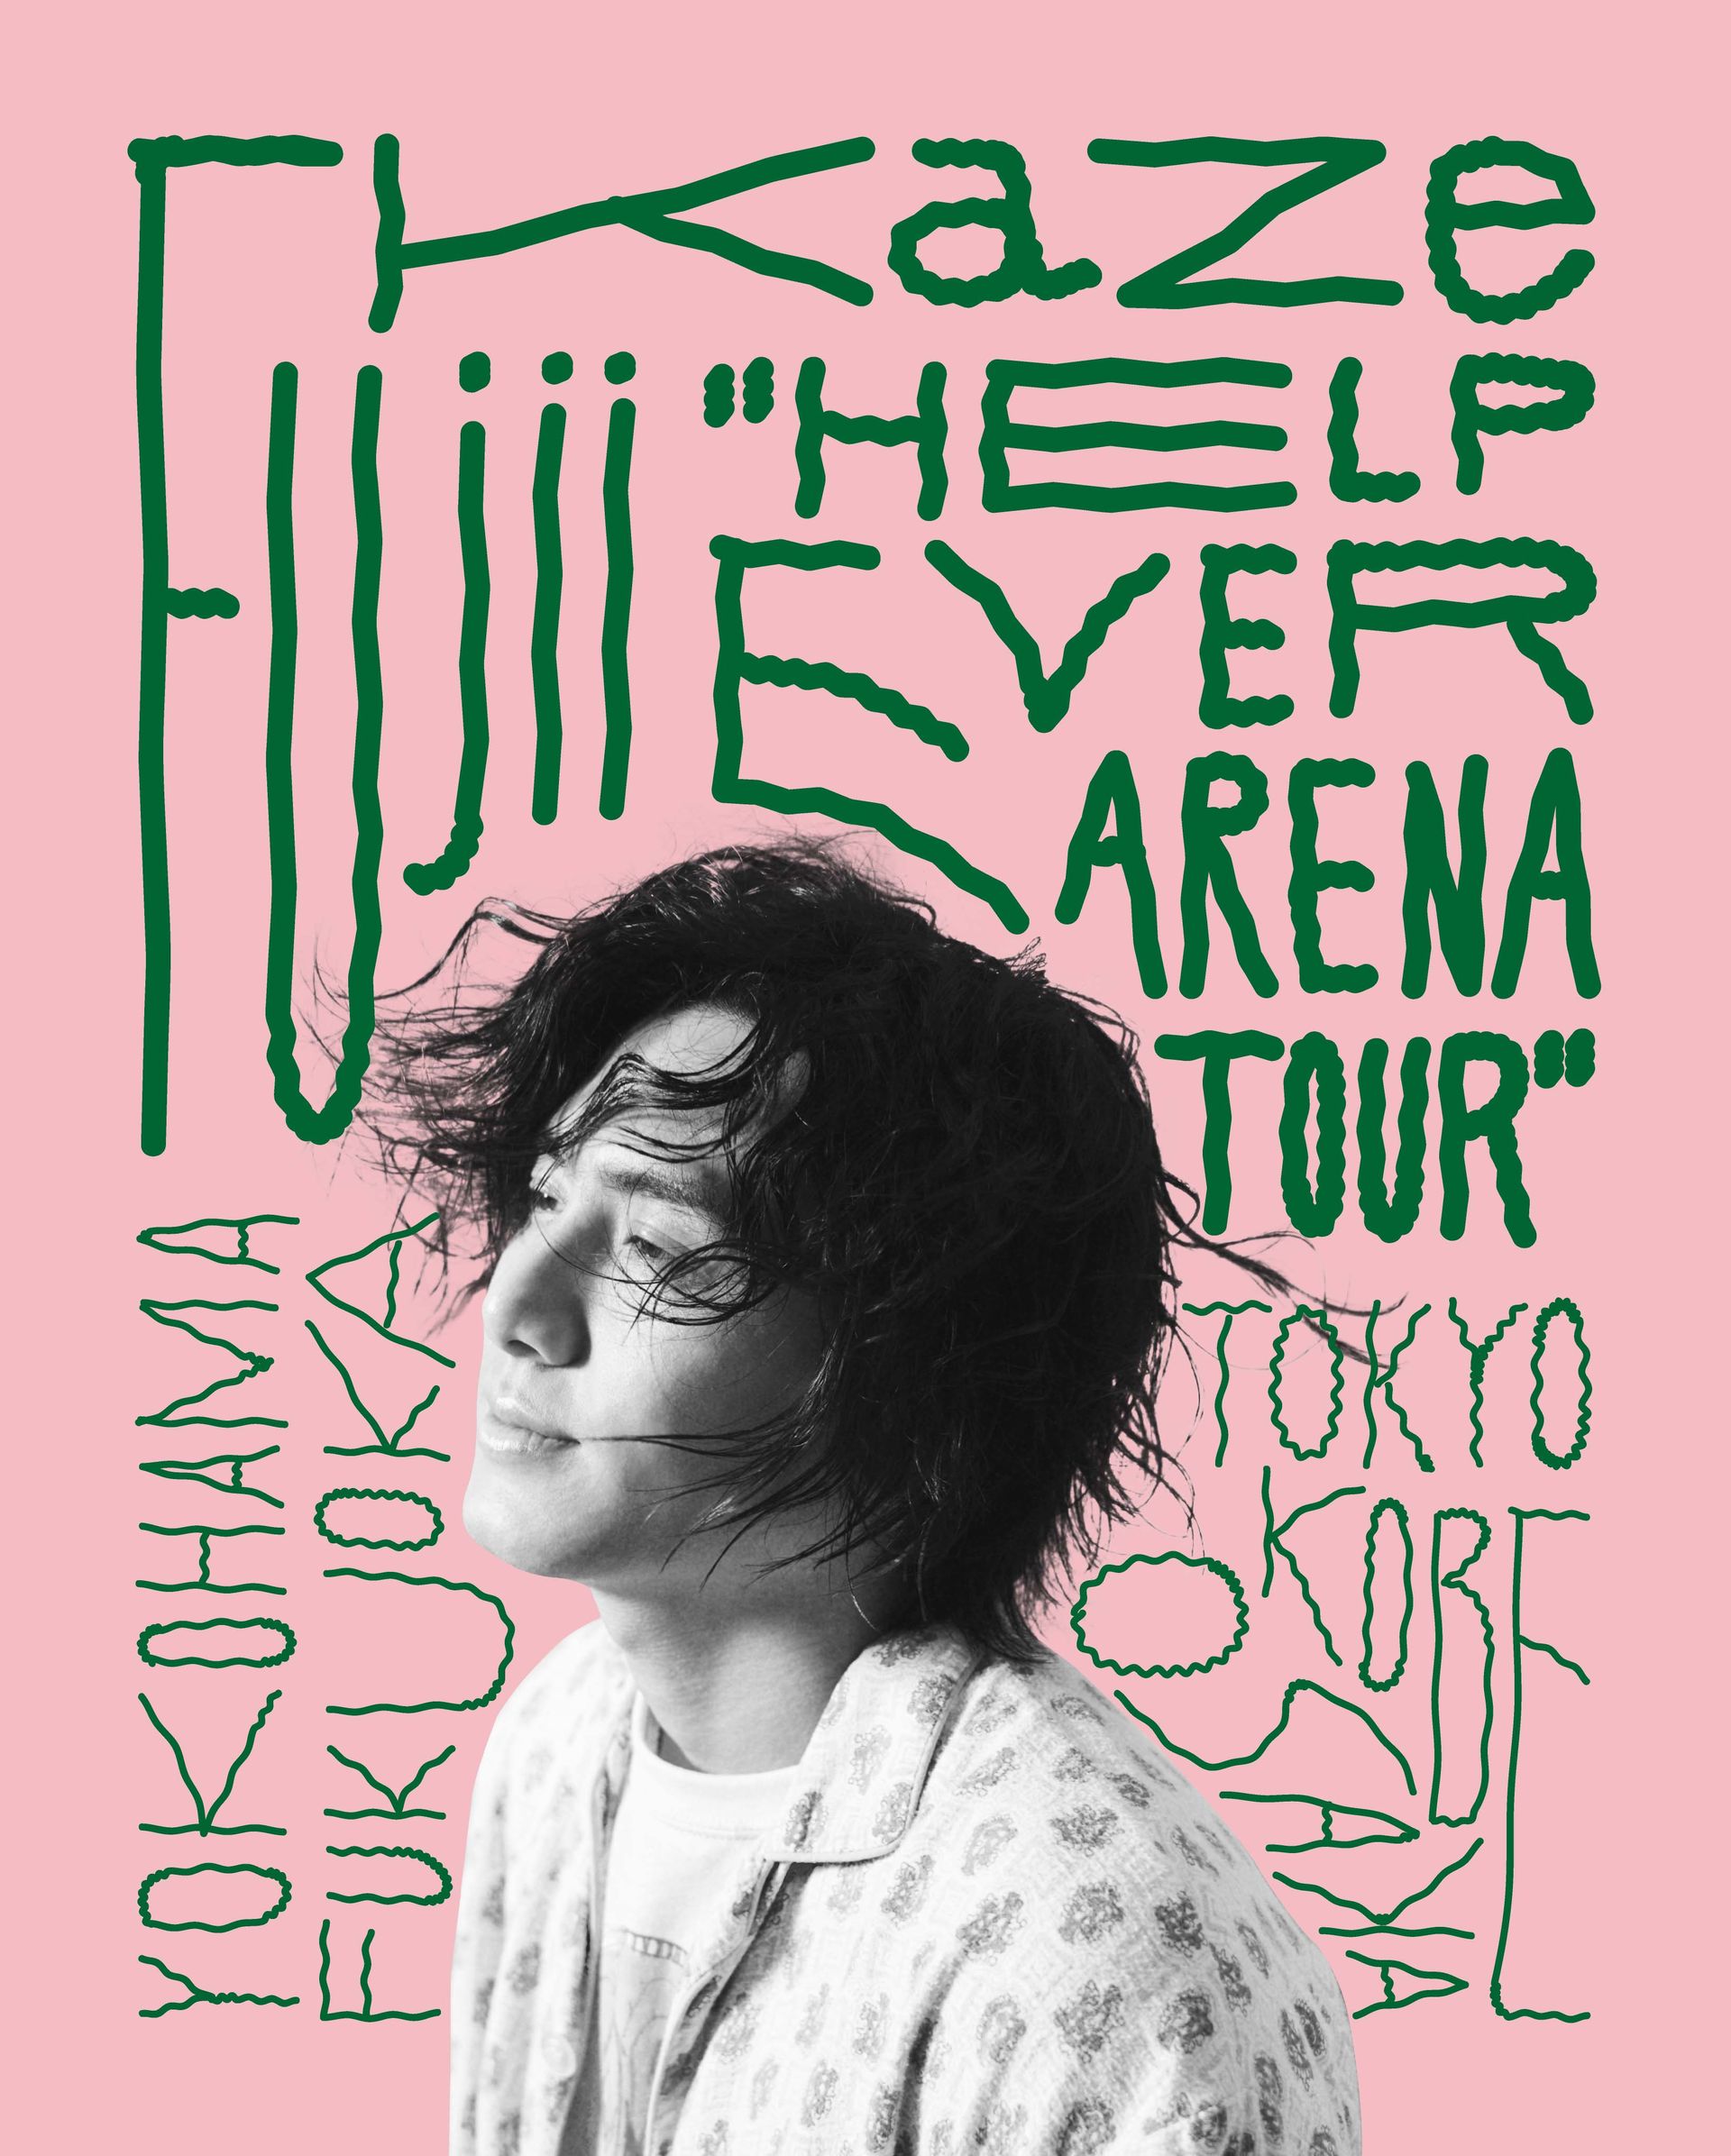 MUSIC/SLASH] Fujii Kaze “HELP EVER ARENA TOUR” Verified Tickets 